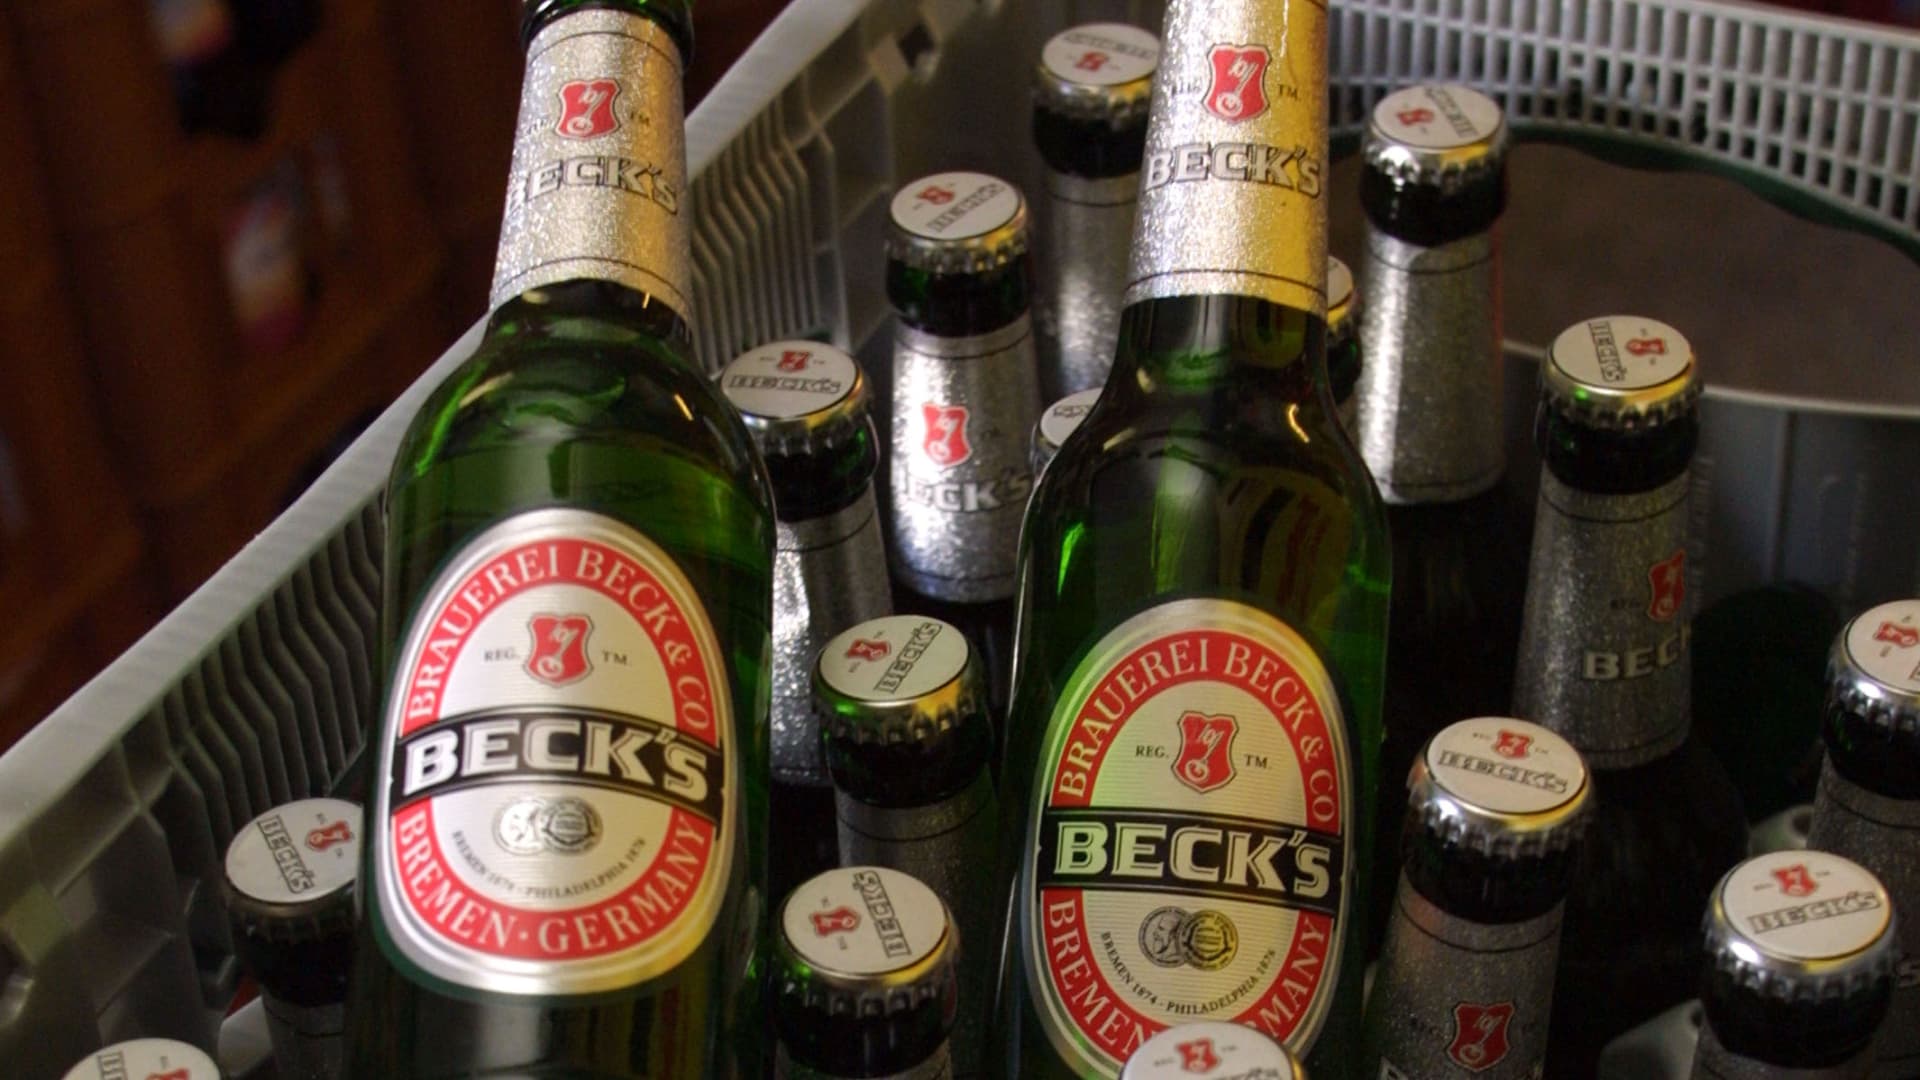 Beck's Beer drinkers feel bamboozled, win refund